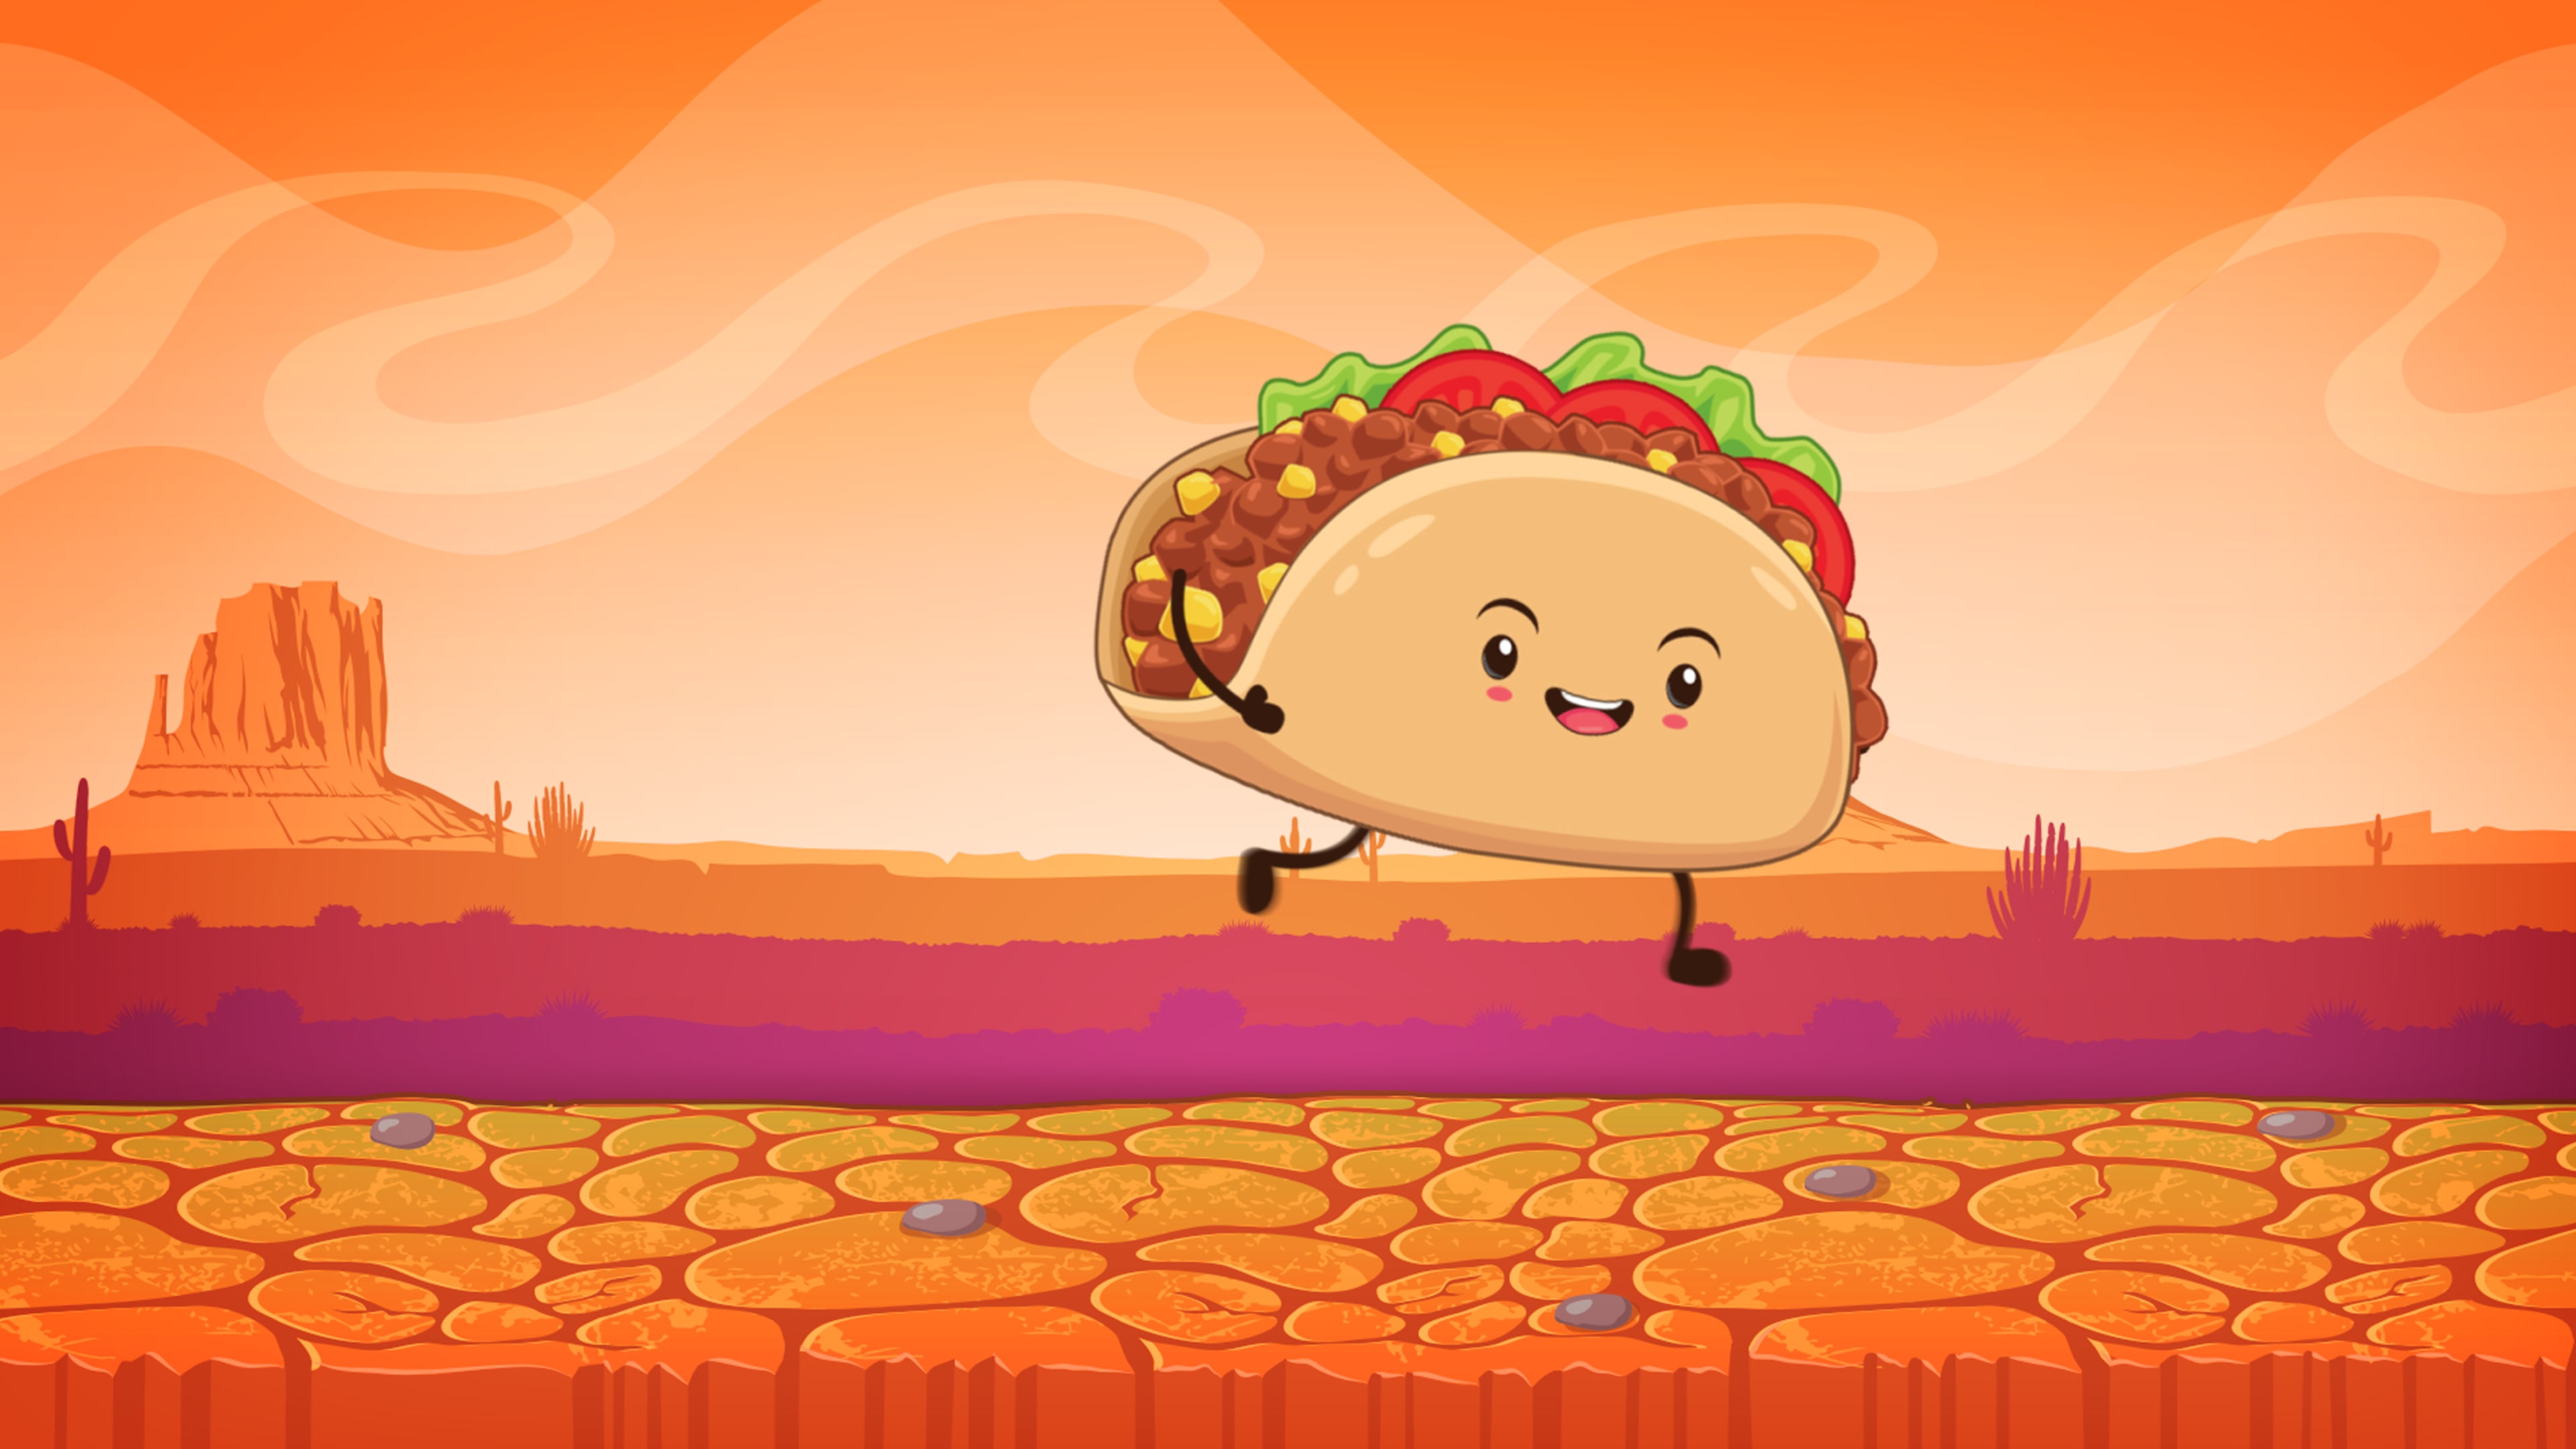 Taco Run - Avatar Full Game Bundle